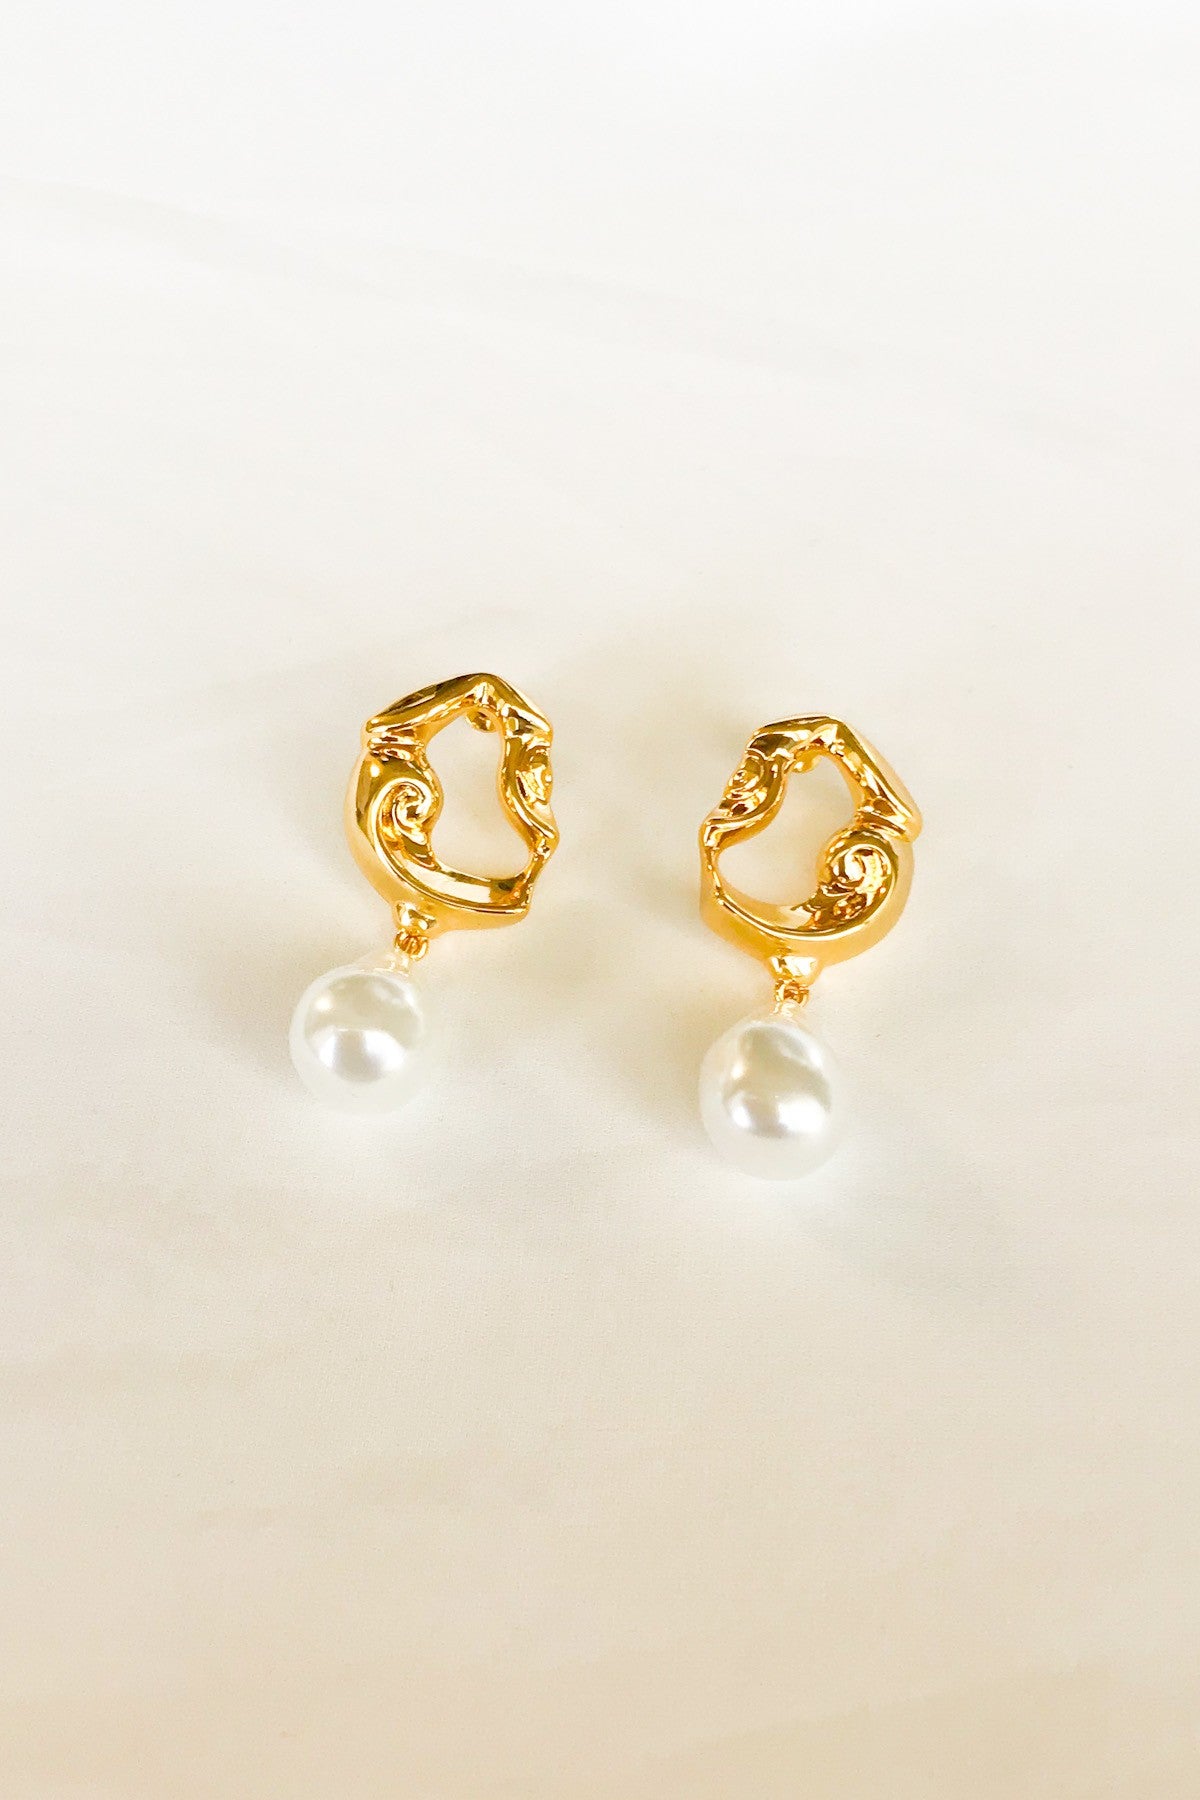 SKYE San Francisco SF shop ethical sustainable modern minimalist luxury women jewelry Spring 2020 Aceline 18K Gold Baroque Pearl Earrings 2